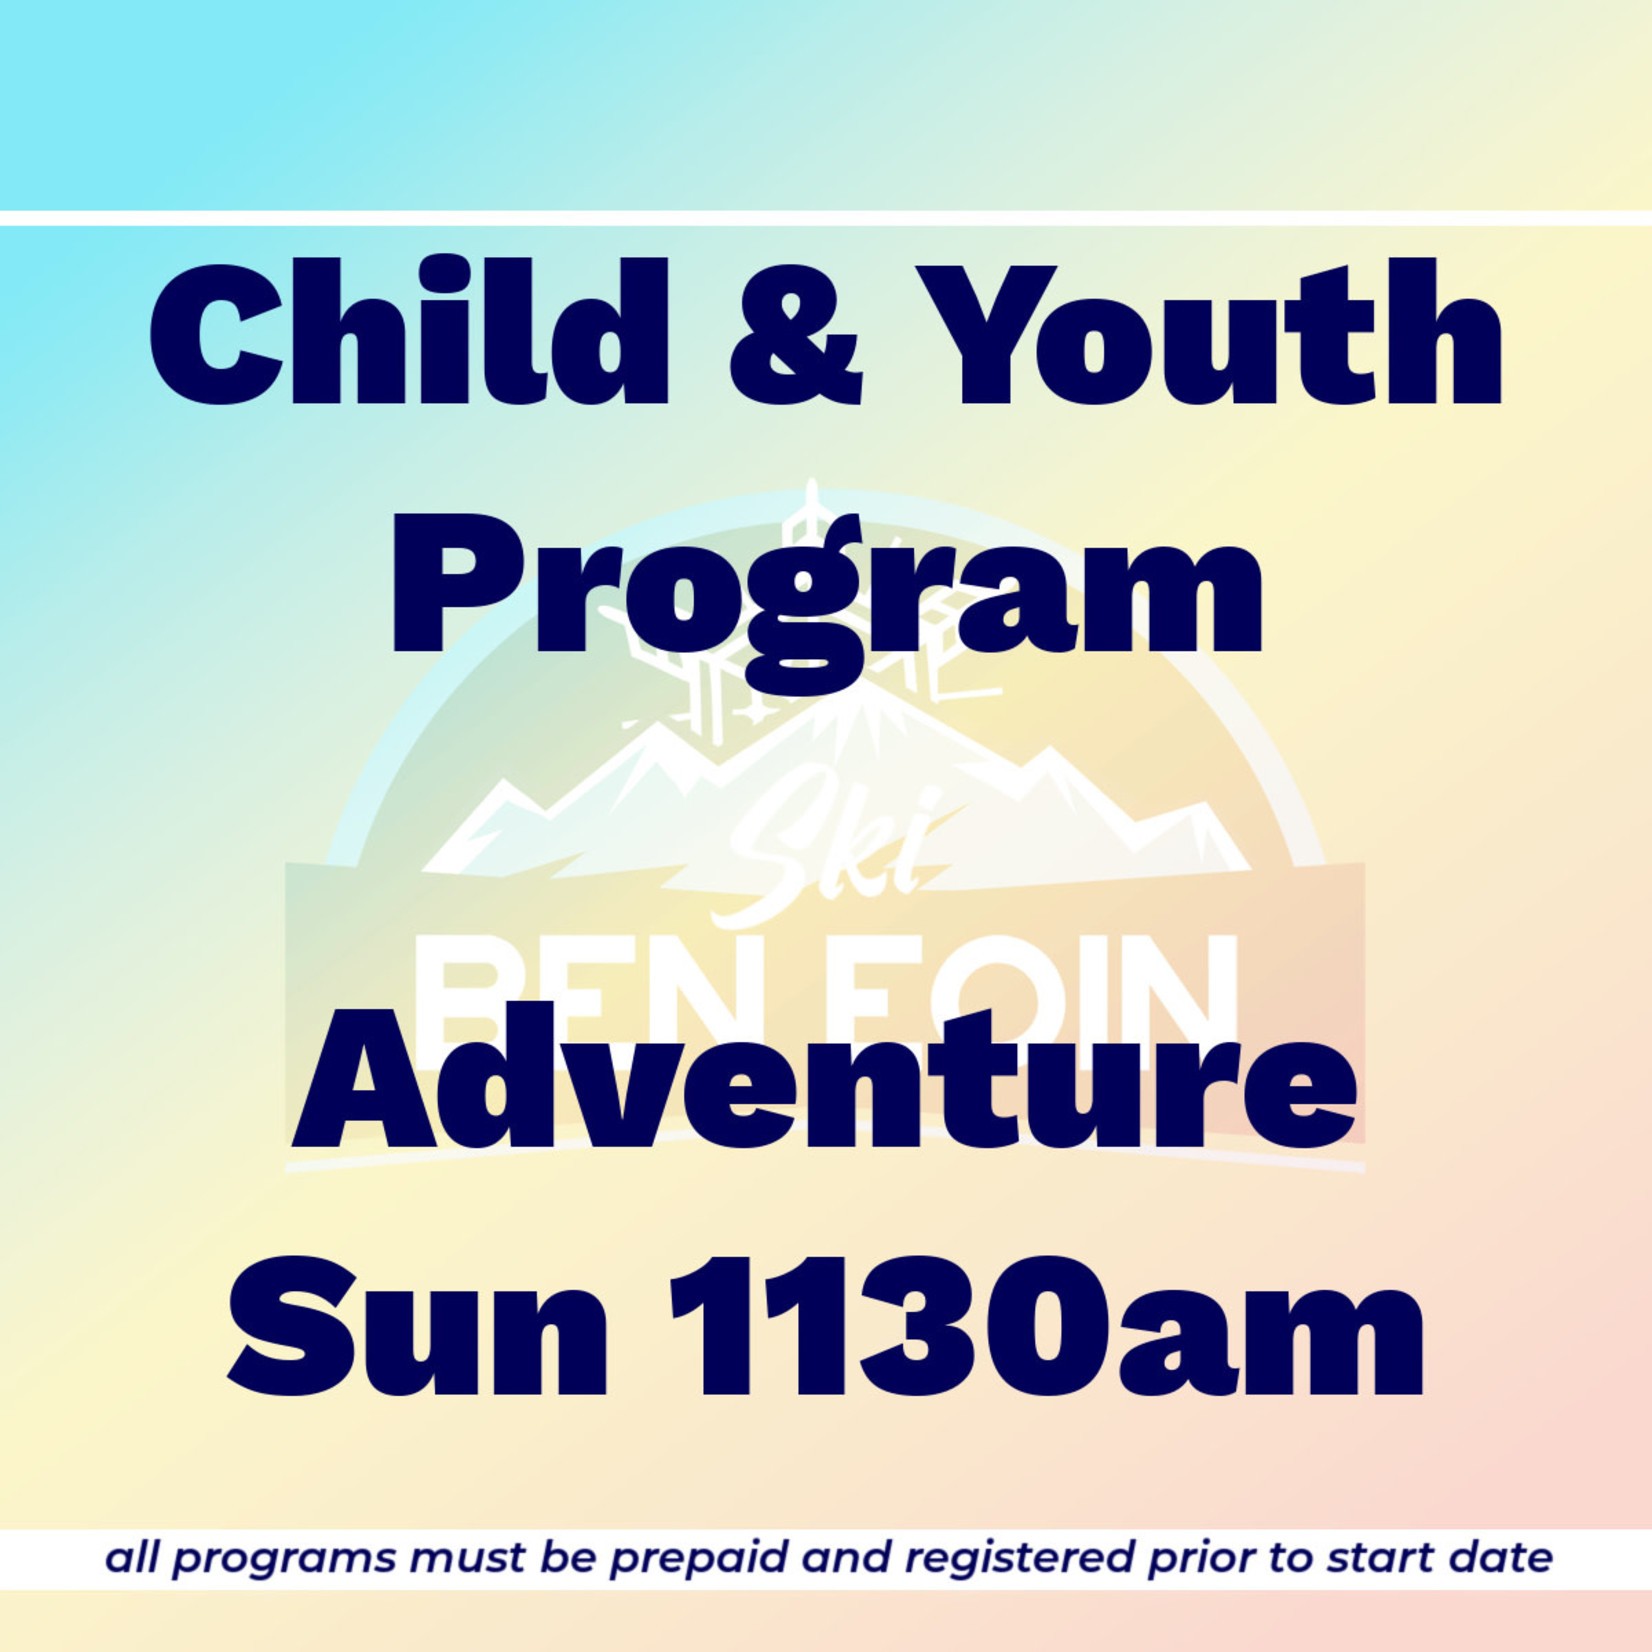 Child & Youth Ski Program Adventure Sun 1130am